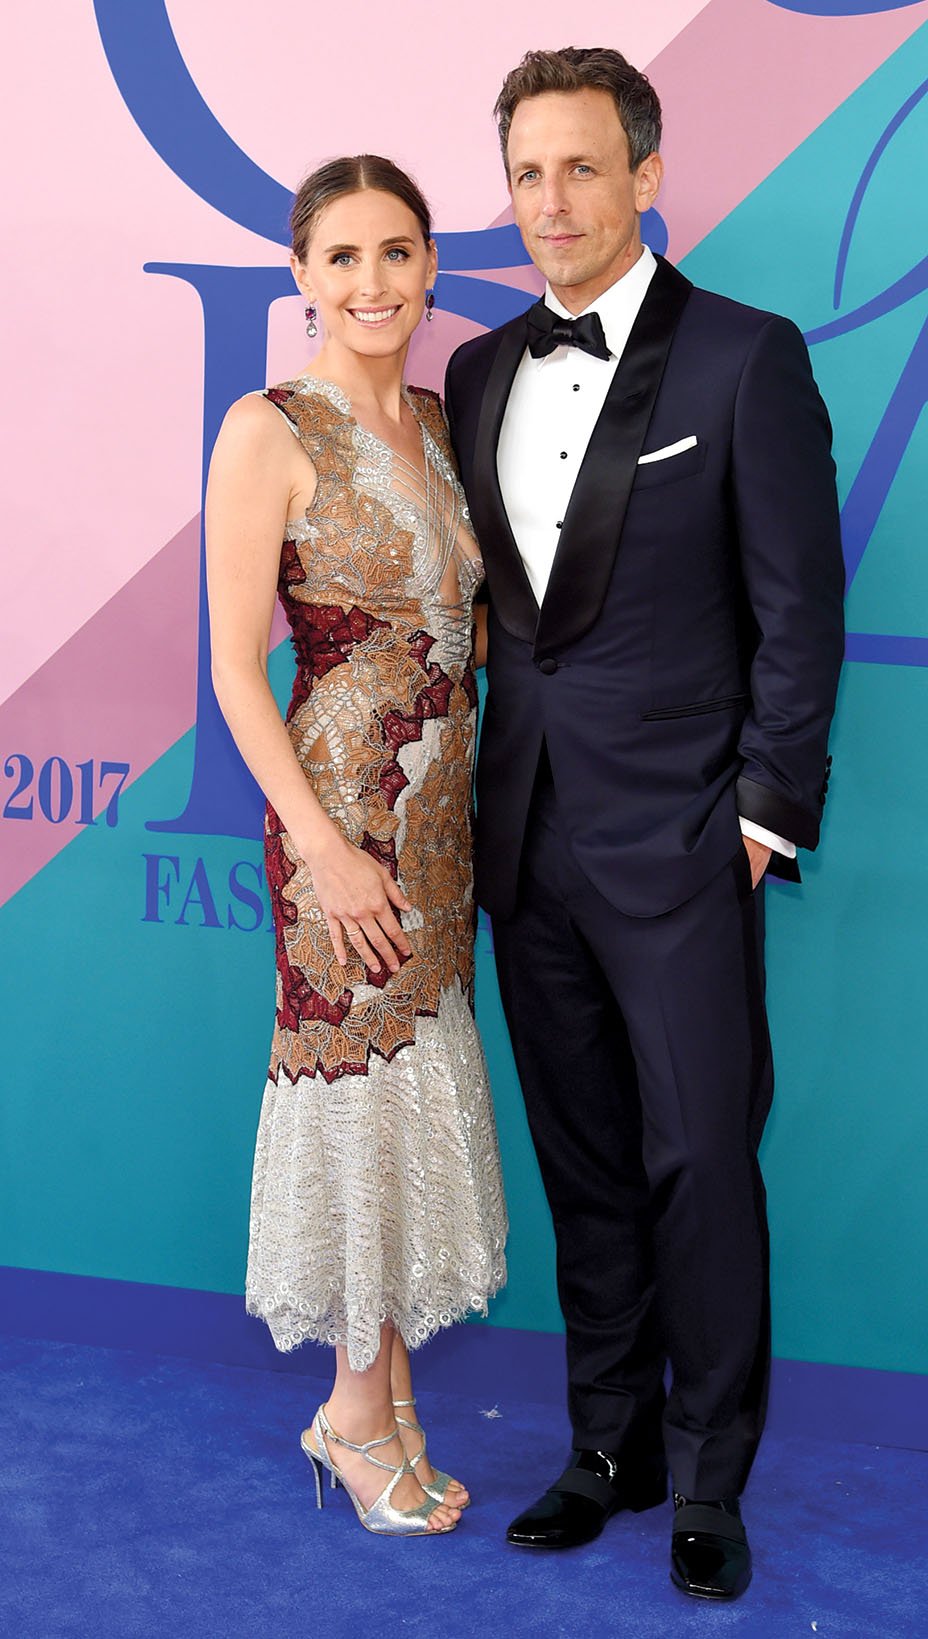 Golden Globes Host Seth Meyers: How to Handle an Awards Show Post-Harvey Weinstein